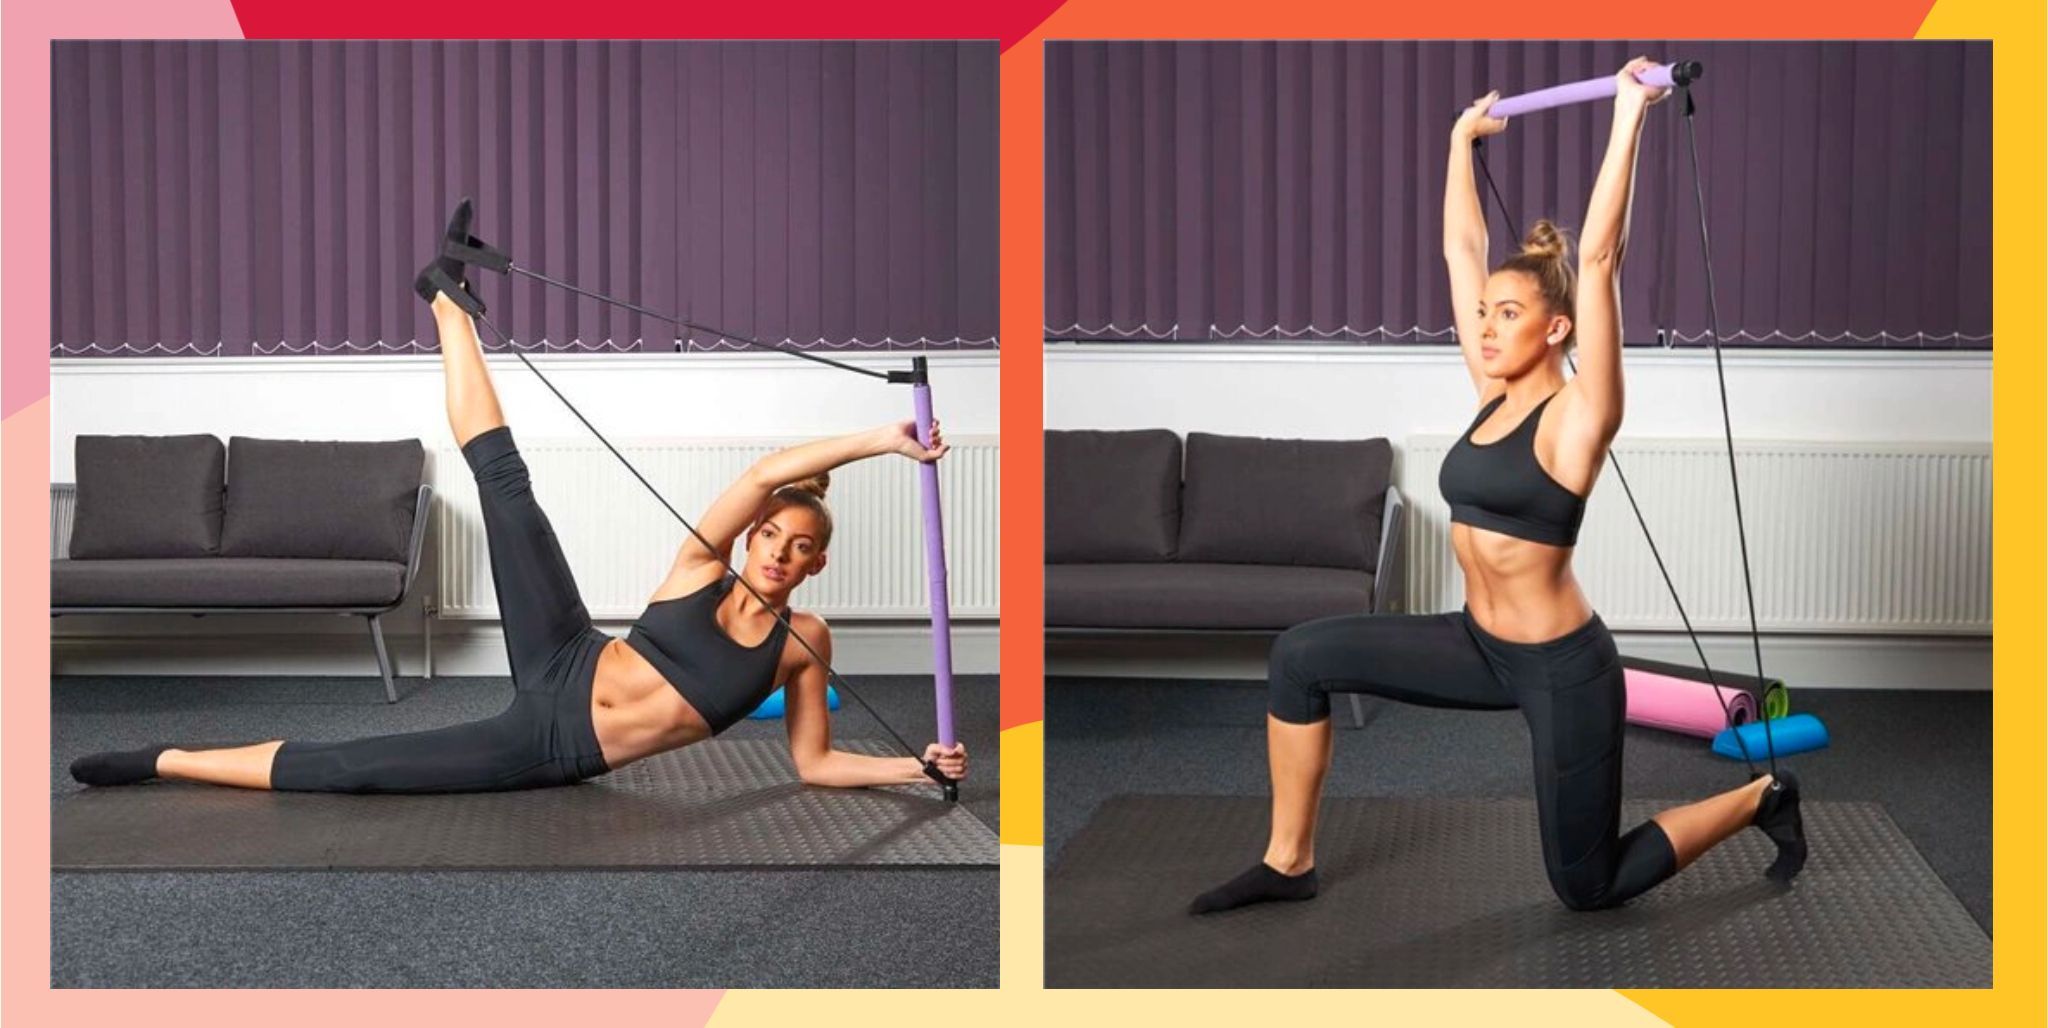 Brand New: Gaiam Ultimate Pilates Core Toning Kit!  Body pilates workout,  Full body pilates workout, Pilates workout